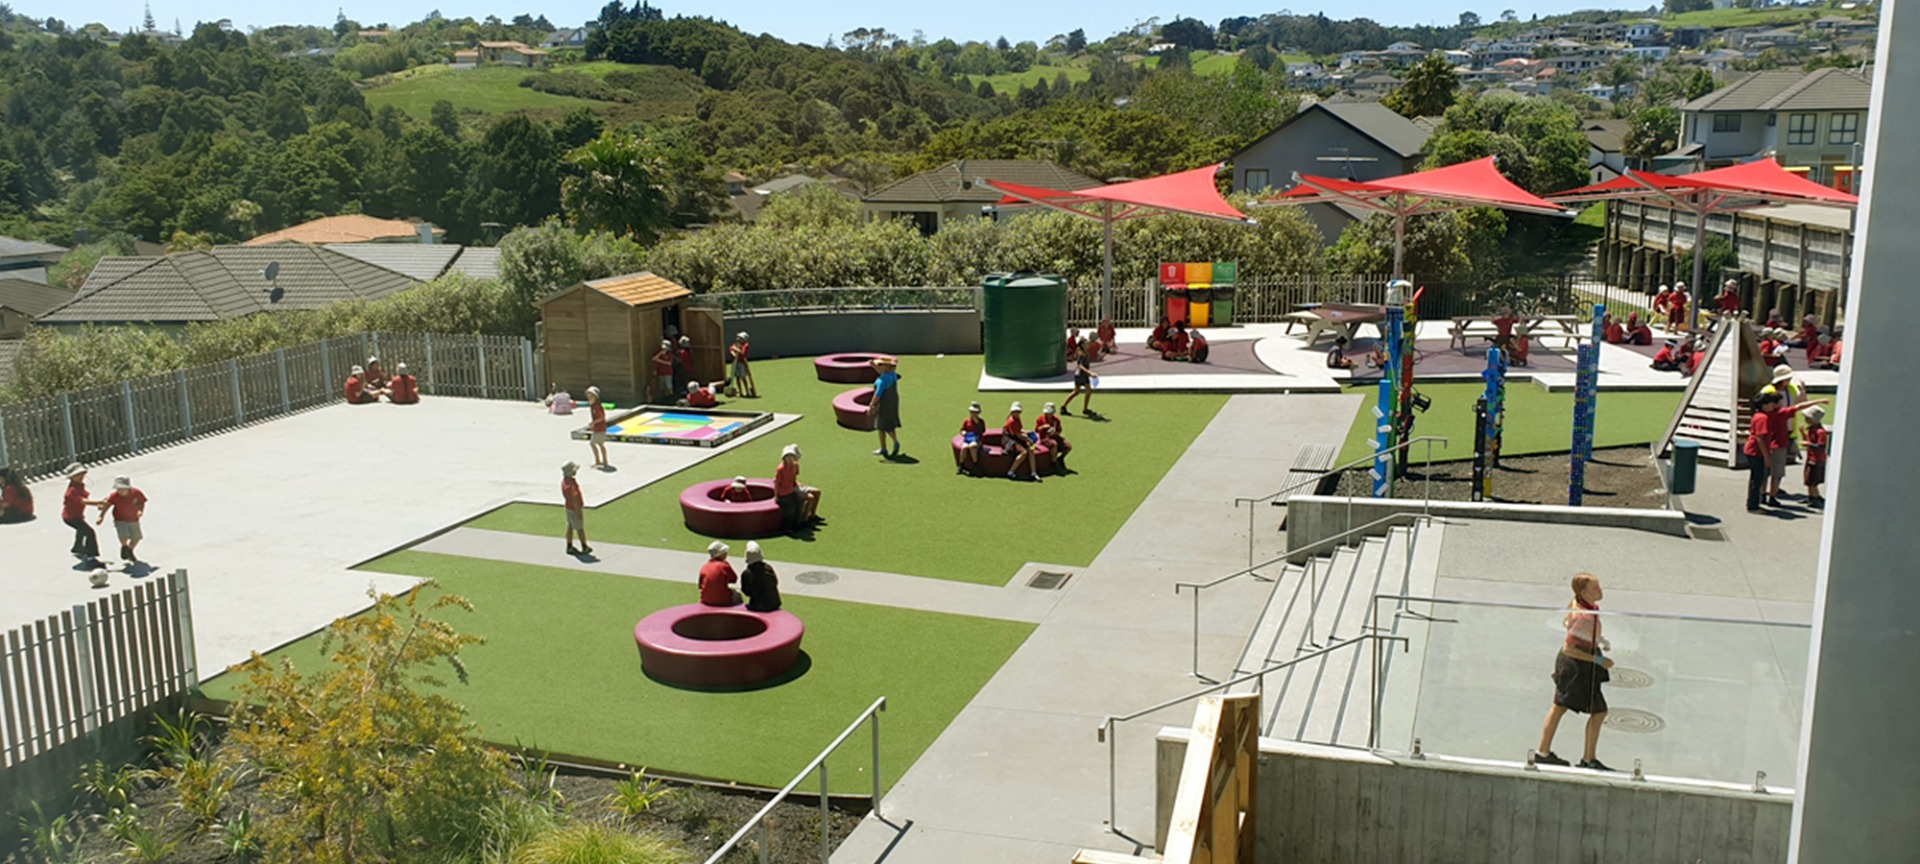 The Garden School in South Auckland